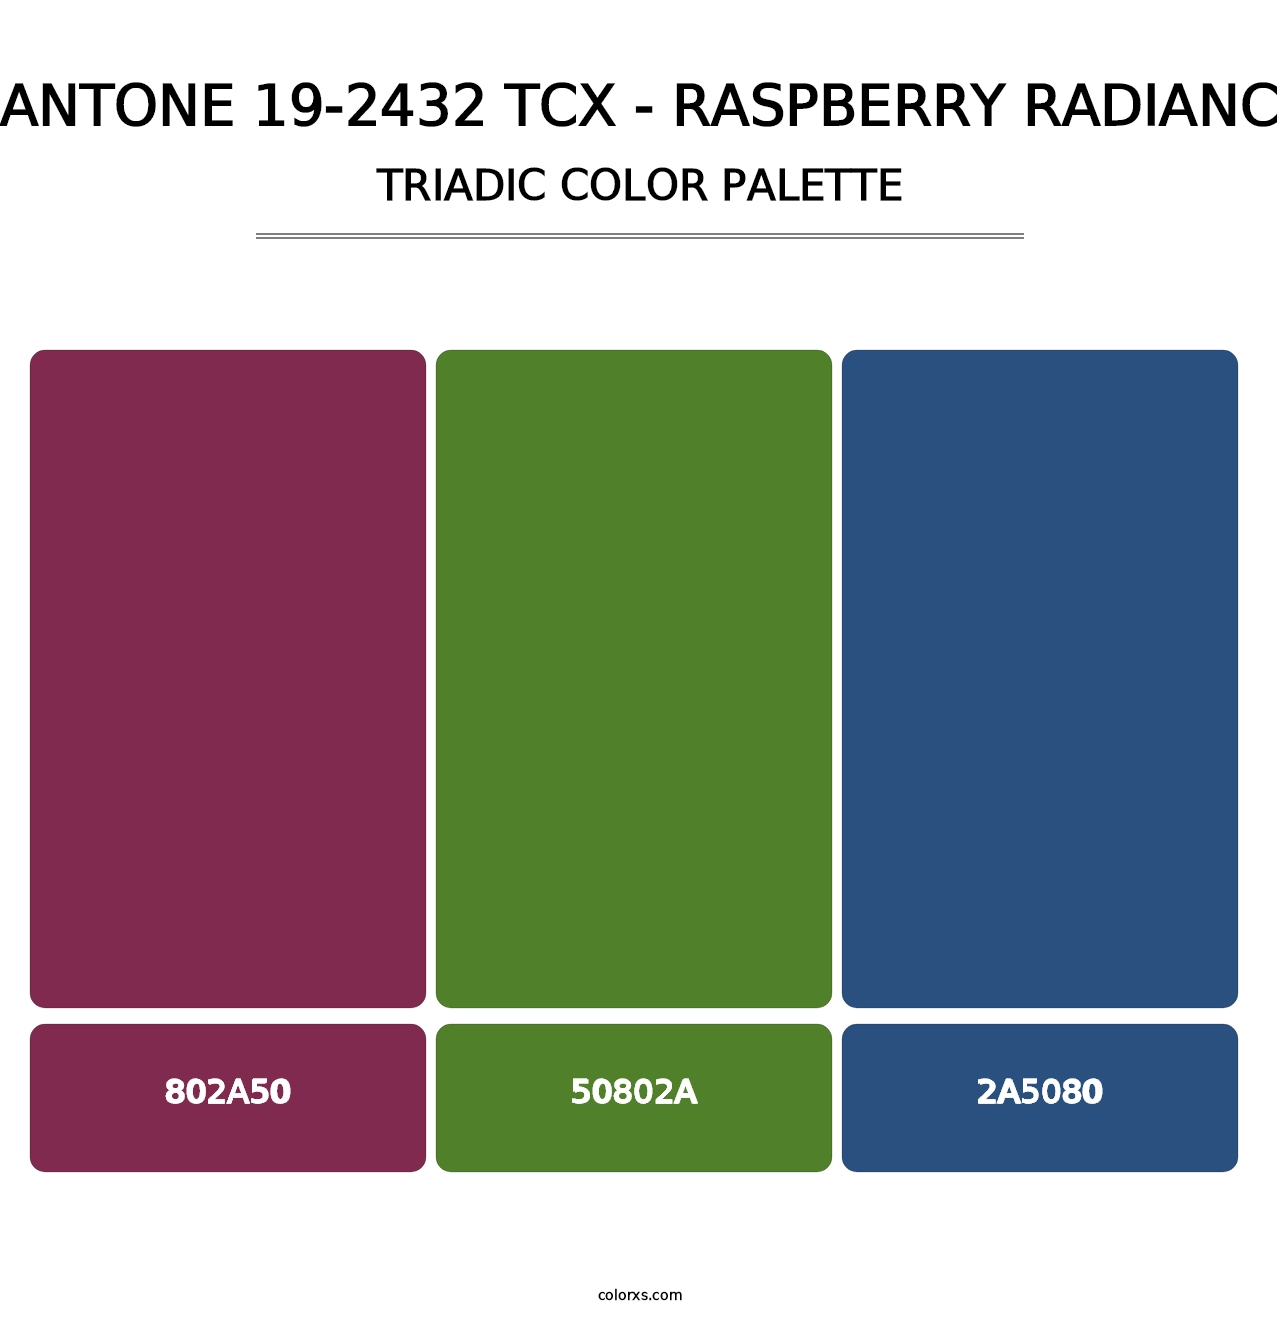 PANTONE 19-2432 TCX - Raspberry Radiance - Triadic Color Palette